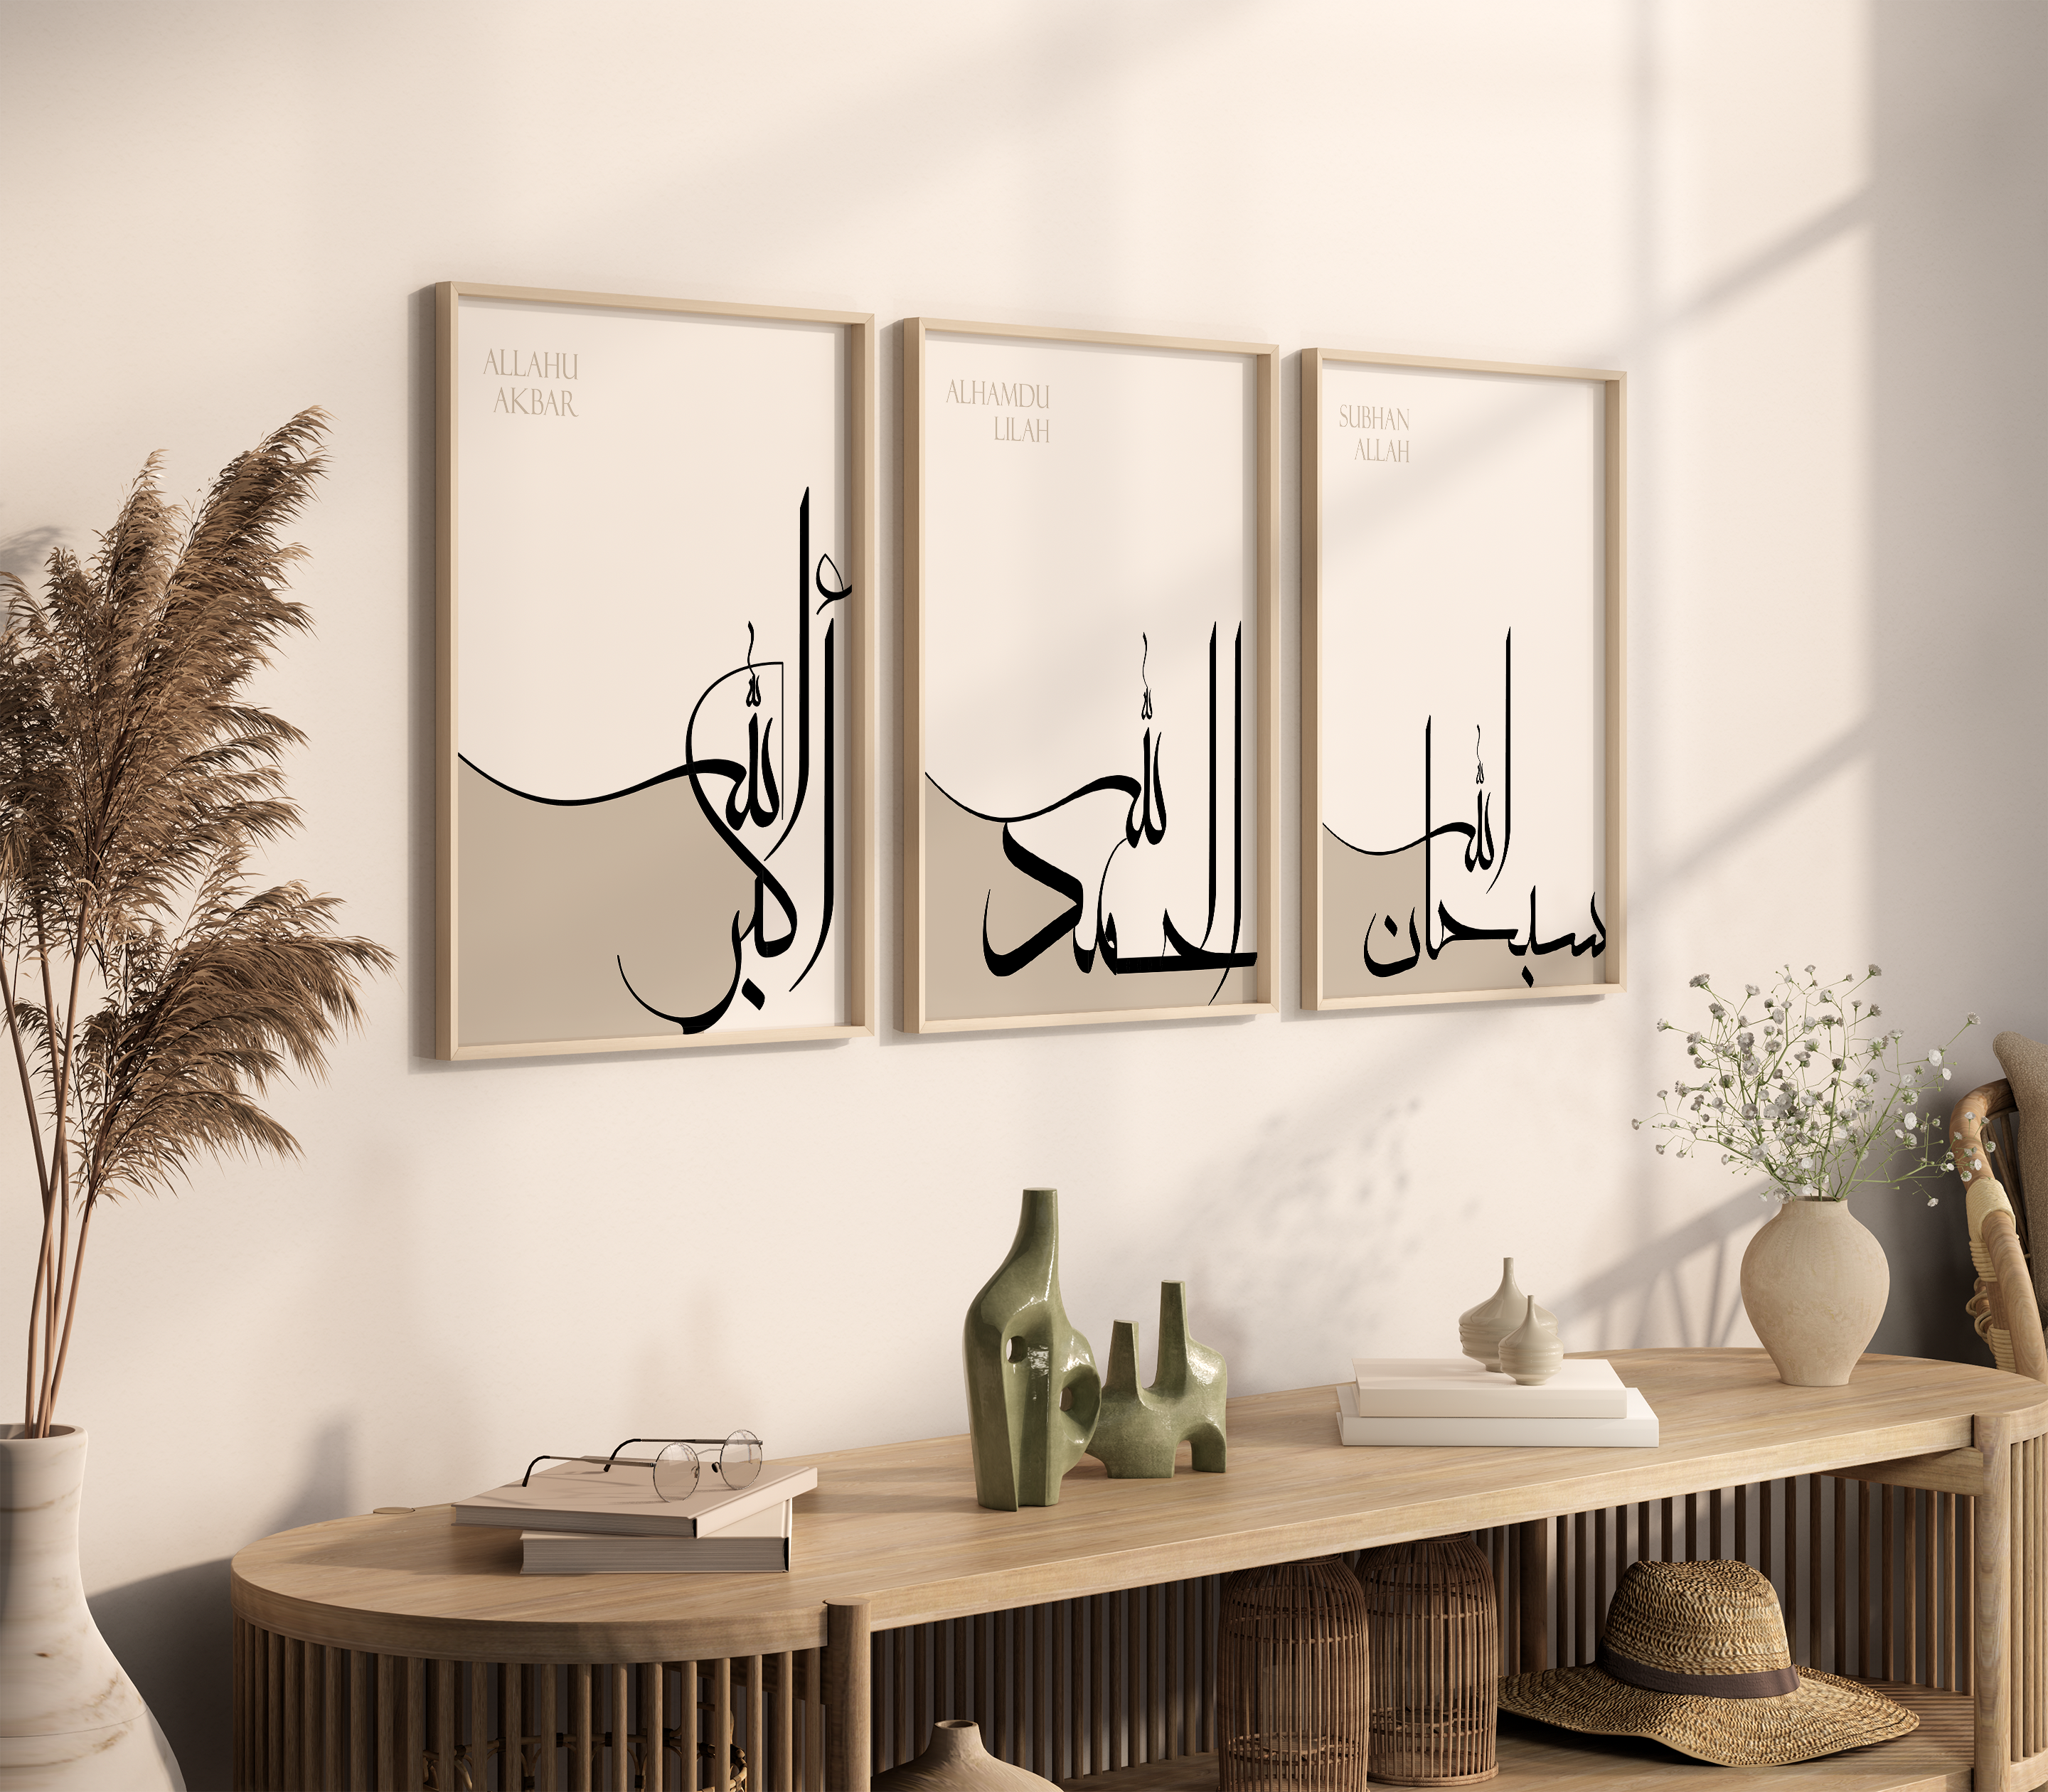 SubhanAllah, Alhamdulillah, AllahuAkbar Minimal Islamic wall art Poster set - Peaceful Arts UK